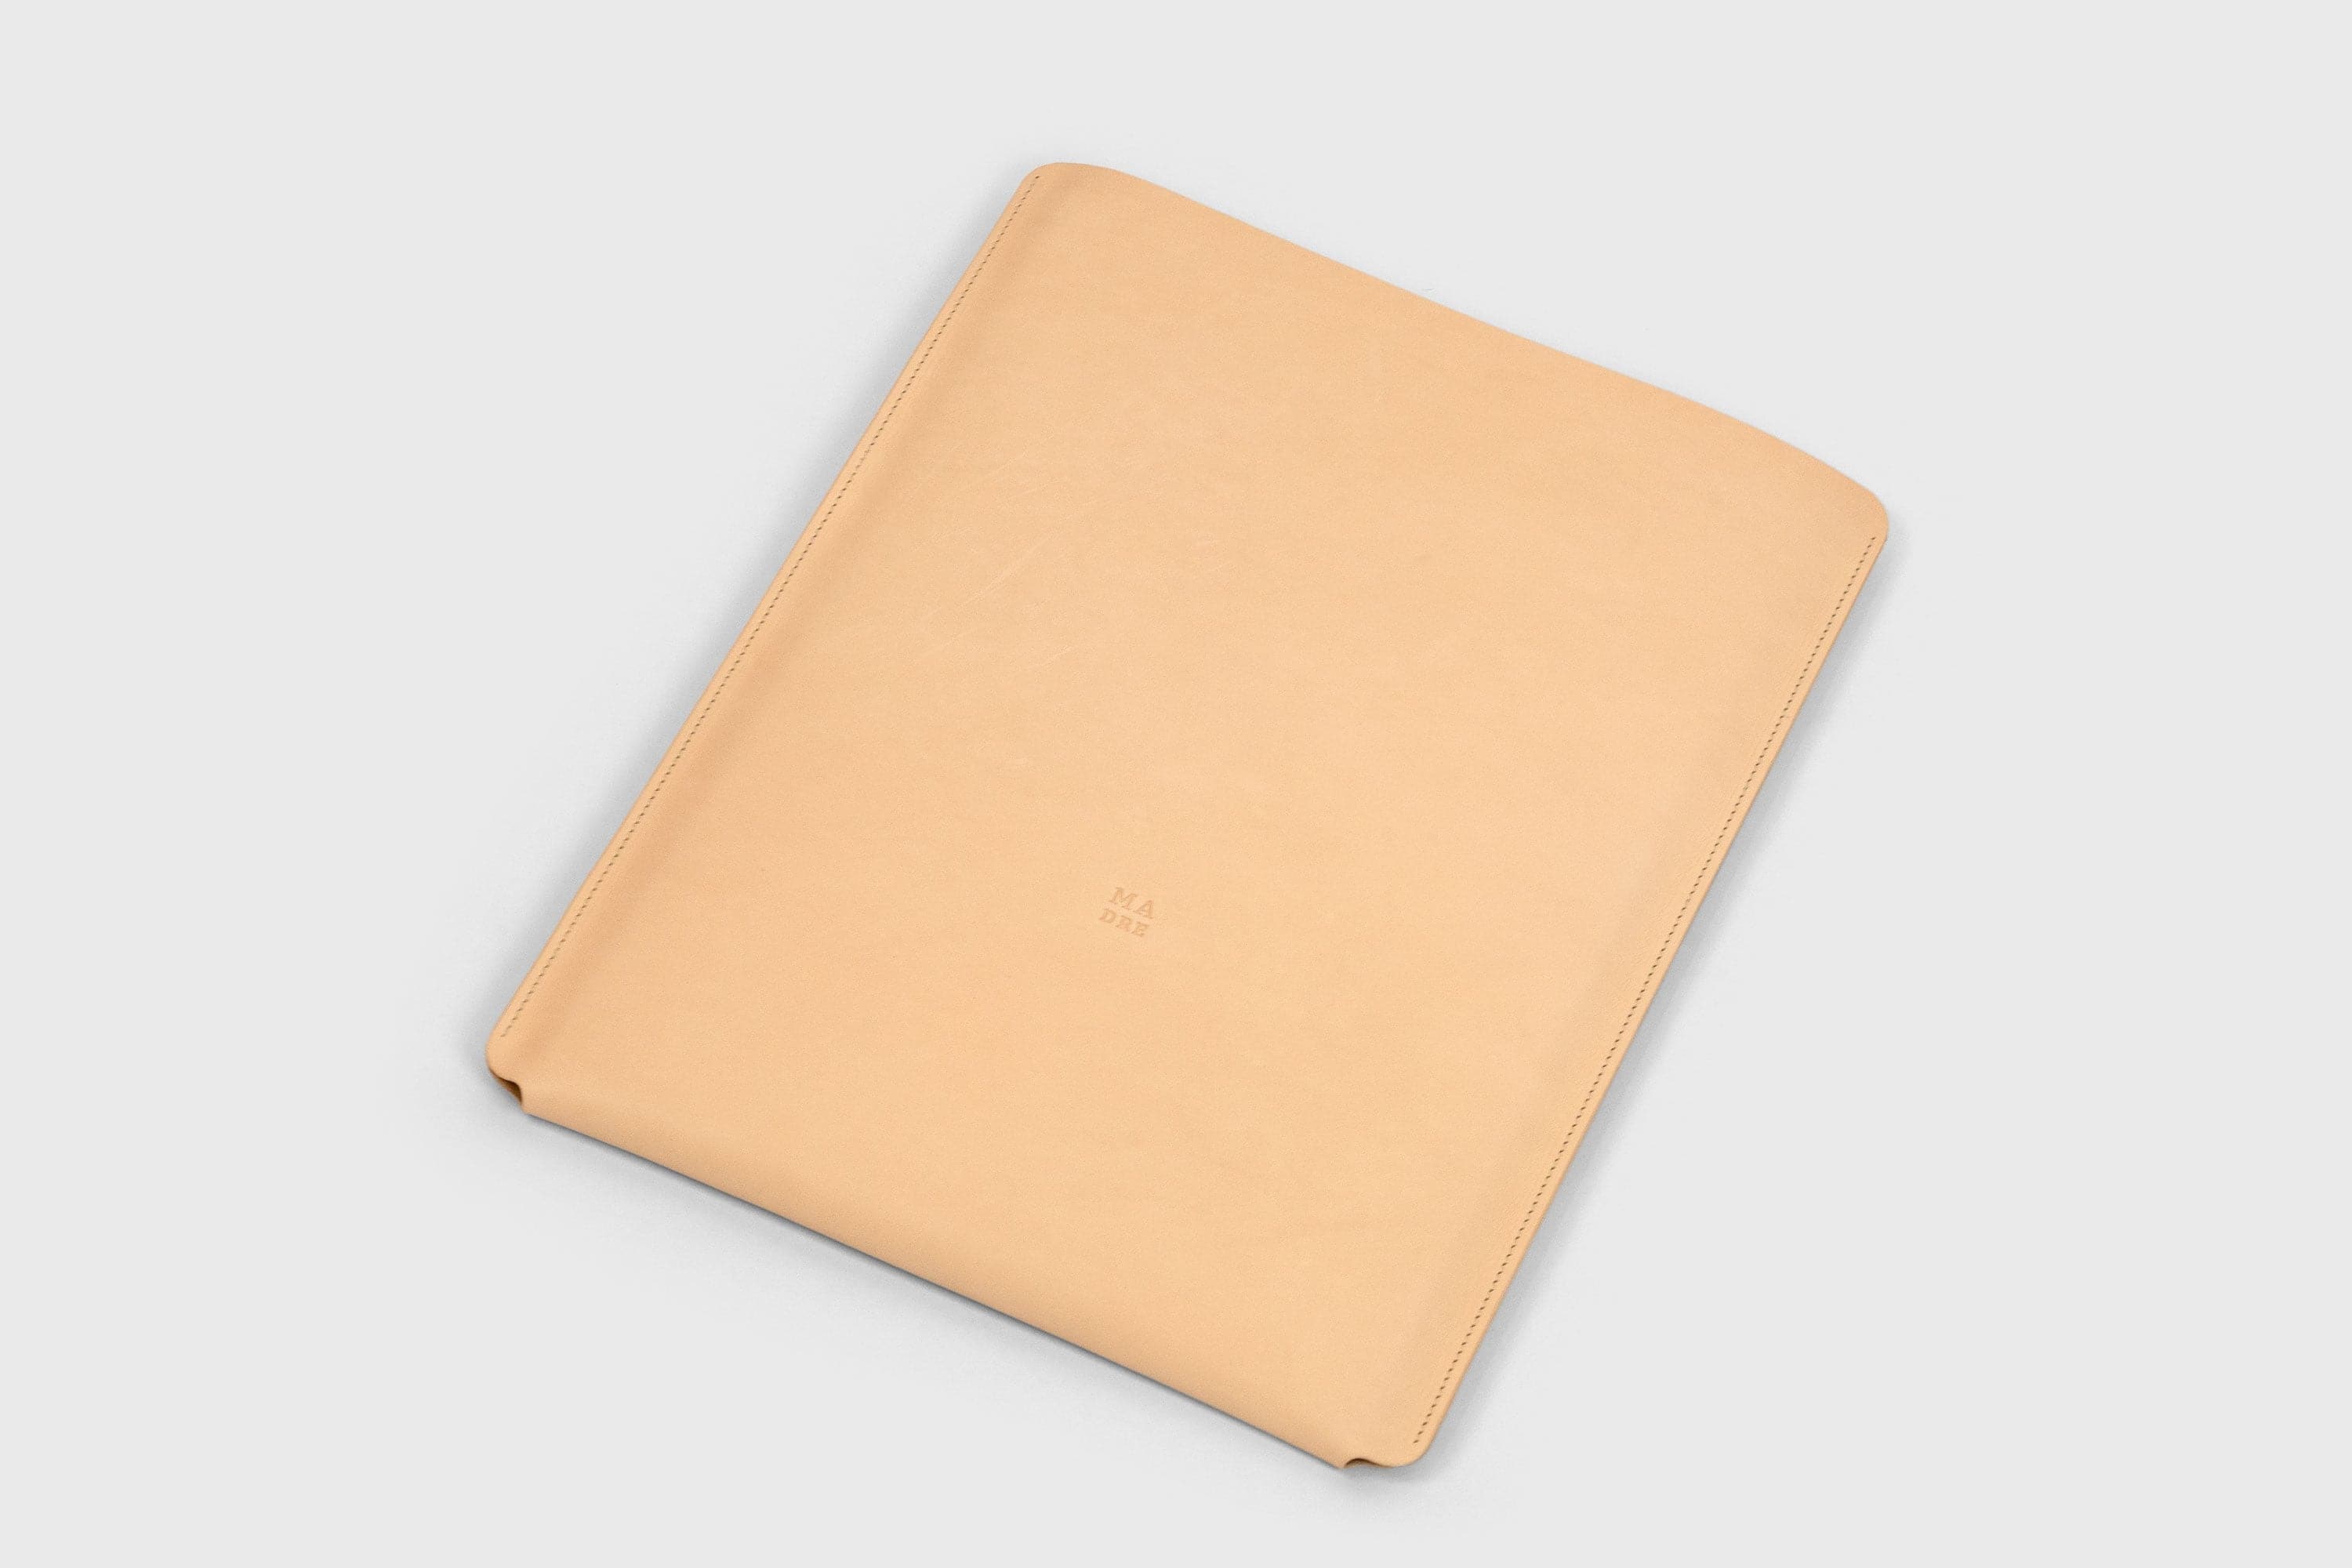 MacBook Pro 16 Inch Leather Slip Sleeve Case Natural Vegetable Tanned Full Grain Real Leather Minimalistic Design Premium Quality Manuel Dreesmann Atelier Madre Barcelona